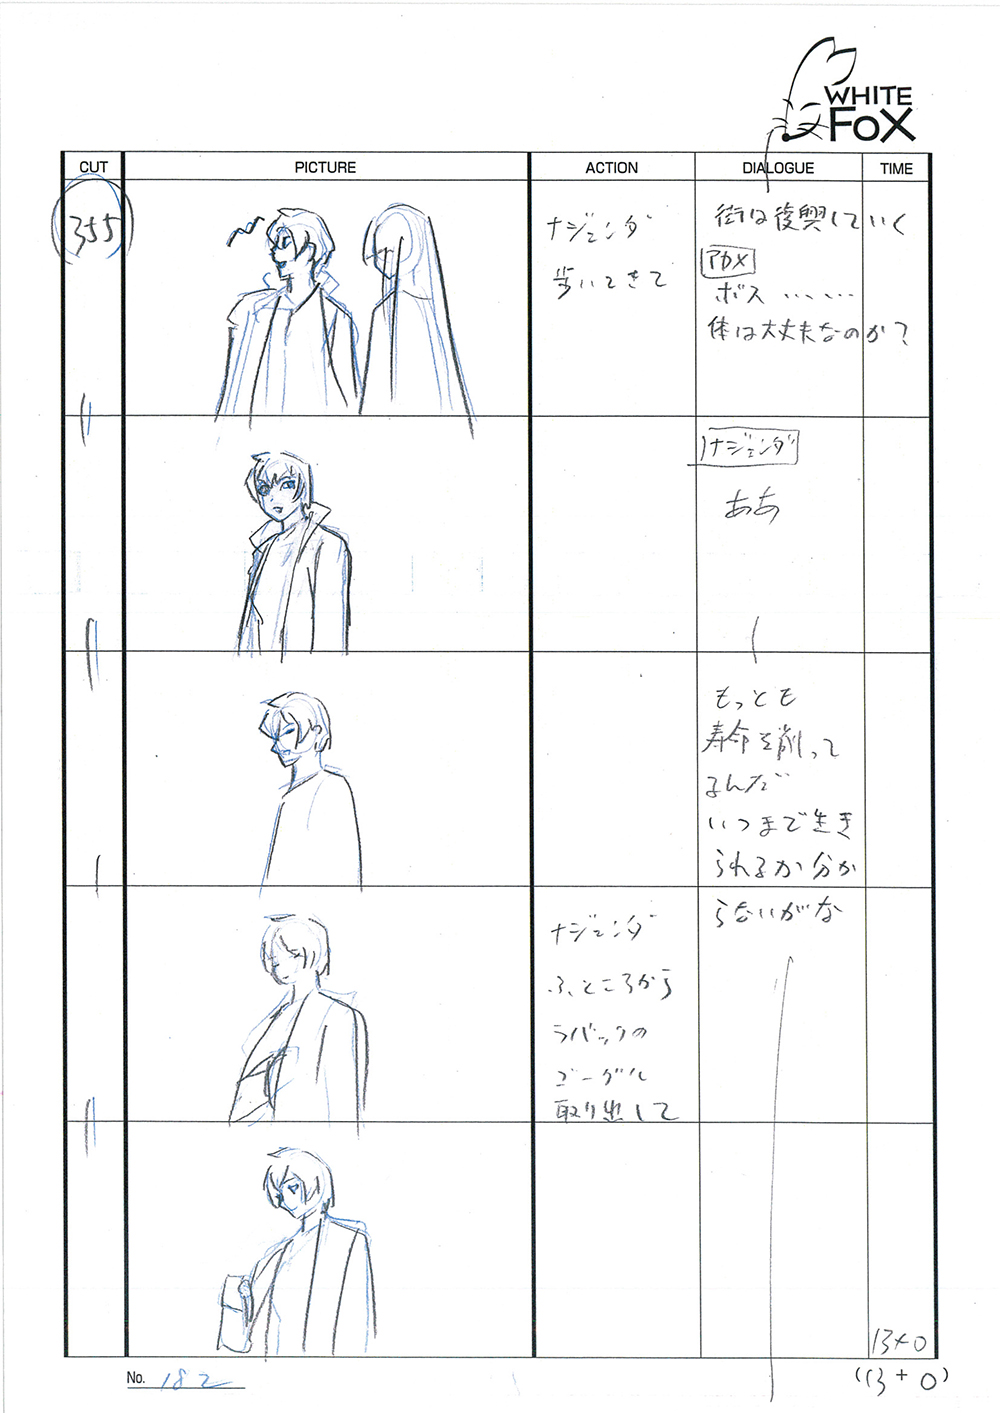 Akame ga Kill Episode 24 Storyboard Leak 187